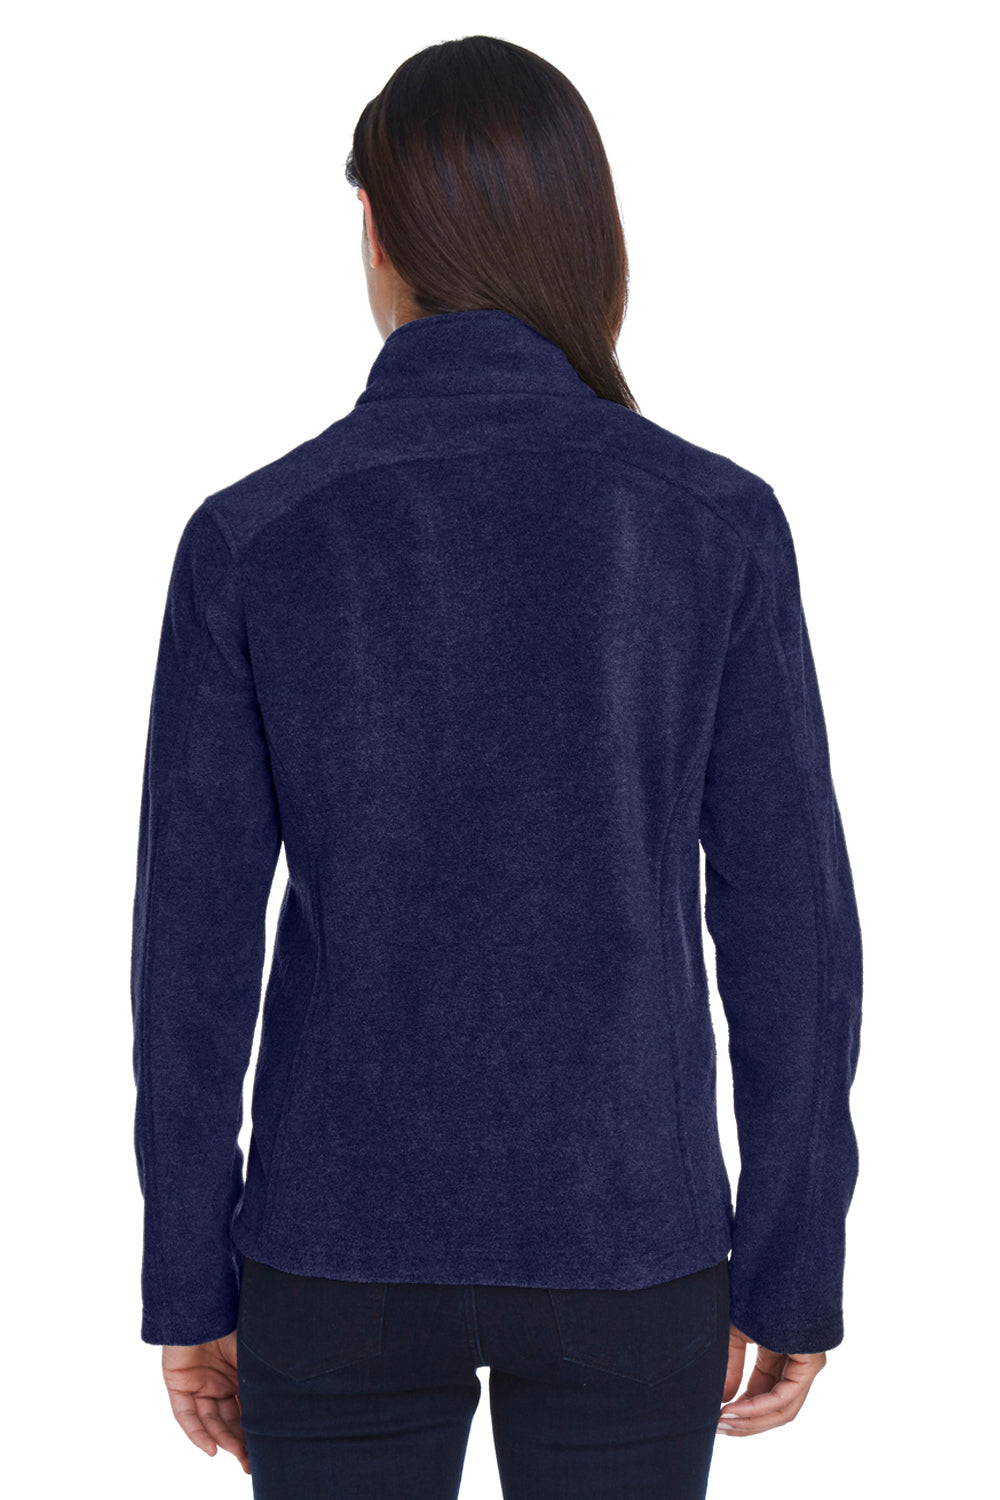 Core 365 78190 Womens Journey Full Zip Fleece Jacket Navy Blue Back